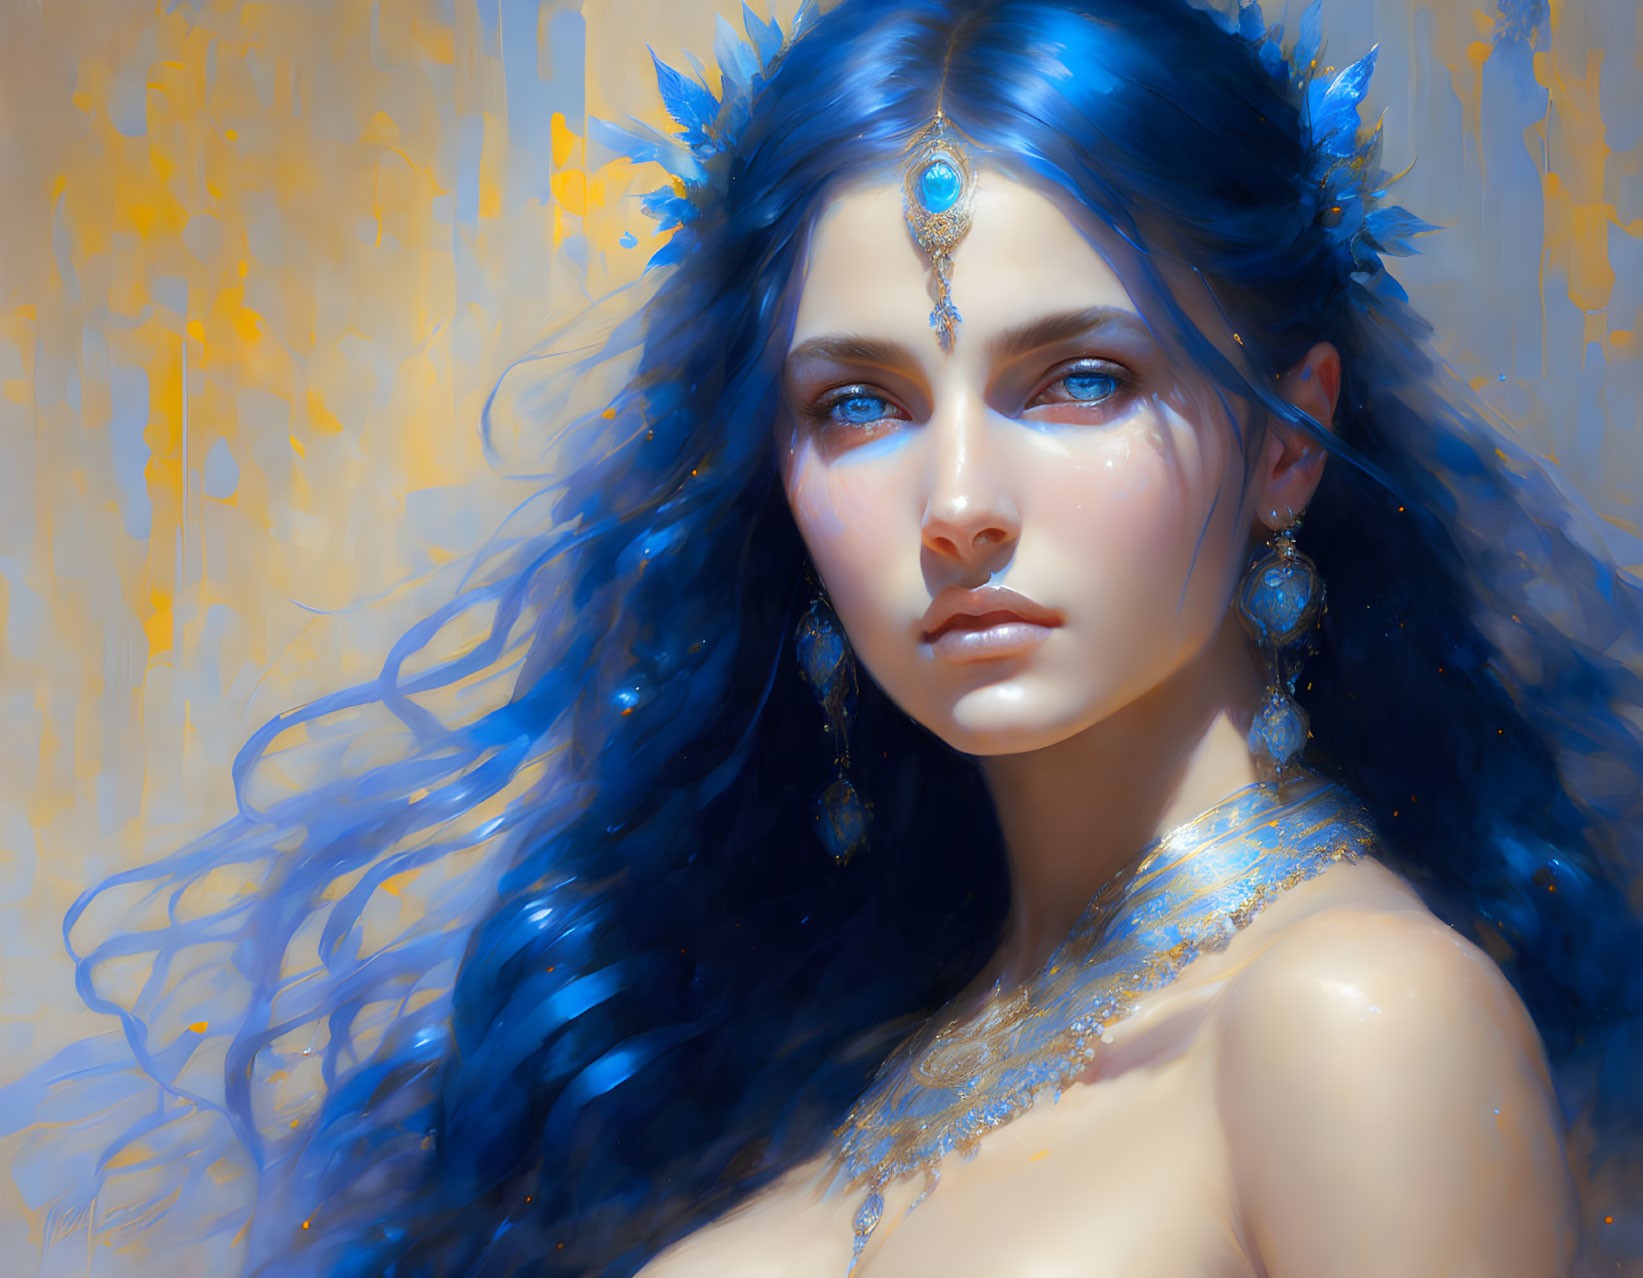 Blue of the hairs & eyes goddess